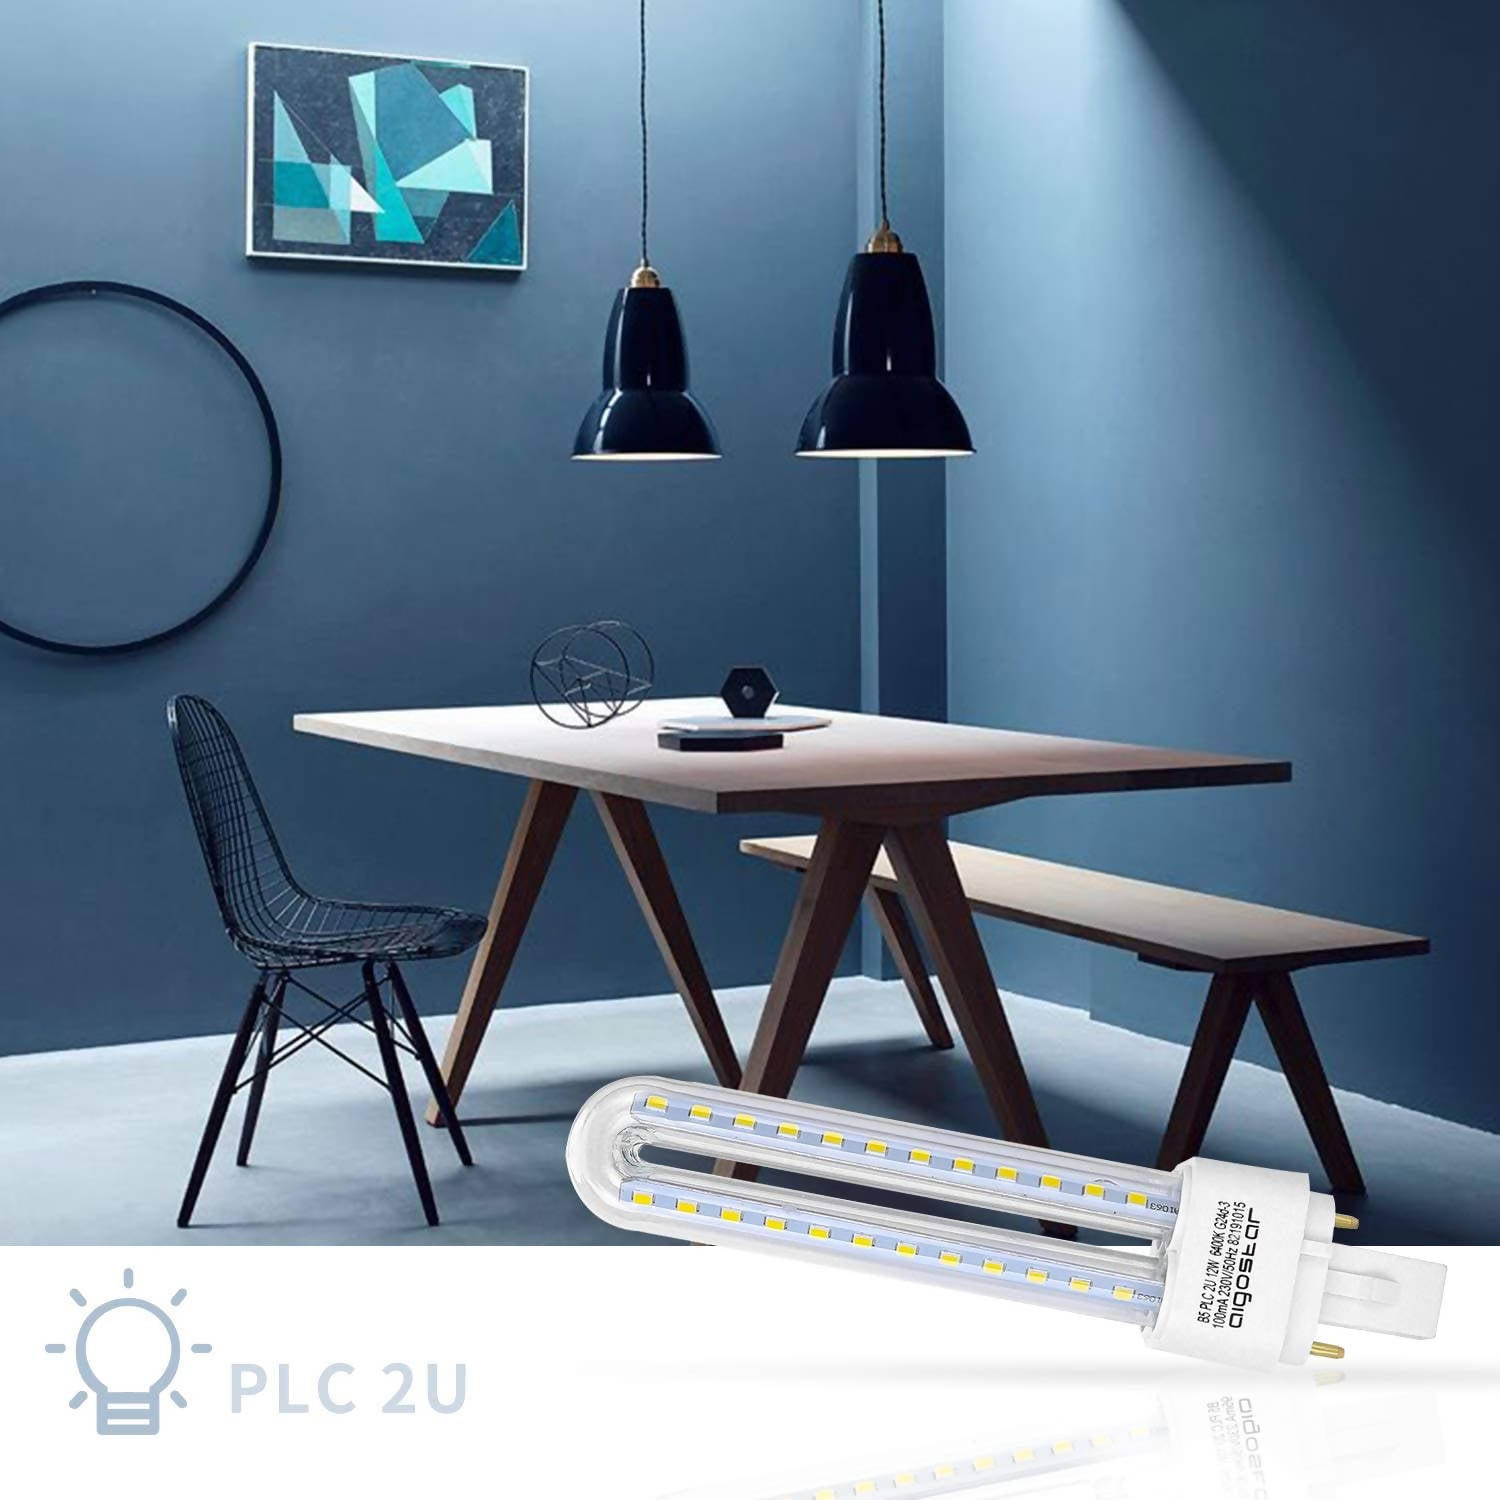 LED Cool White 11 W PLC G24 Bulb Mains Bulb Lamp 6400 K 935 Lumen Beam Angle 360 Degree 2U Bulbs 5 Pieces Energy Saving